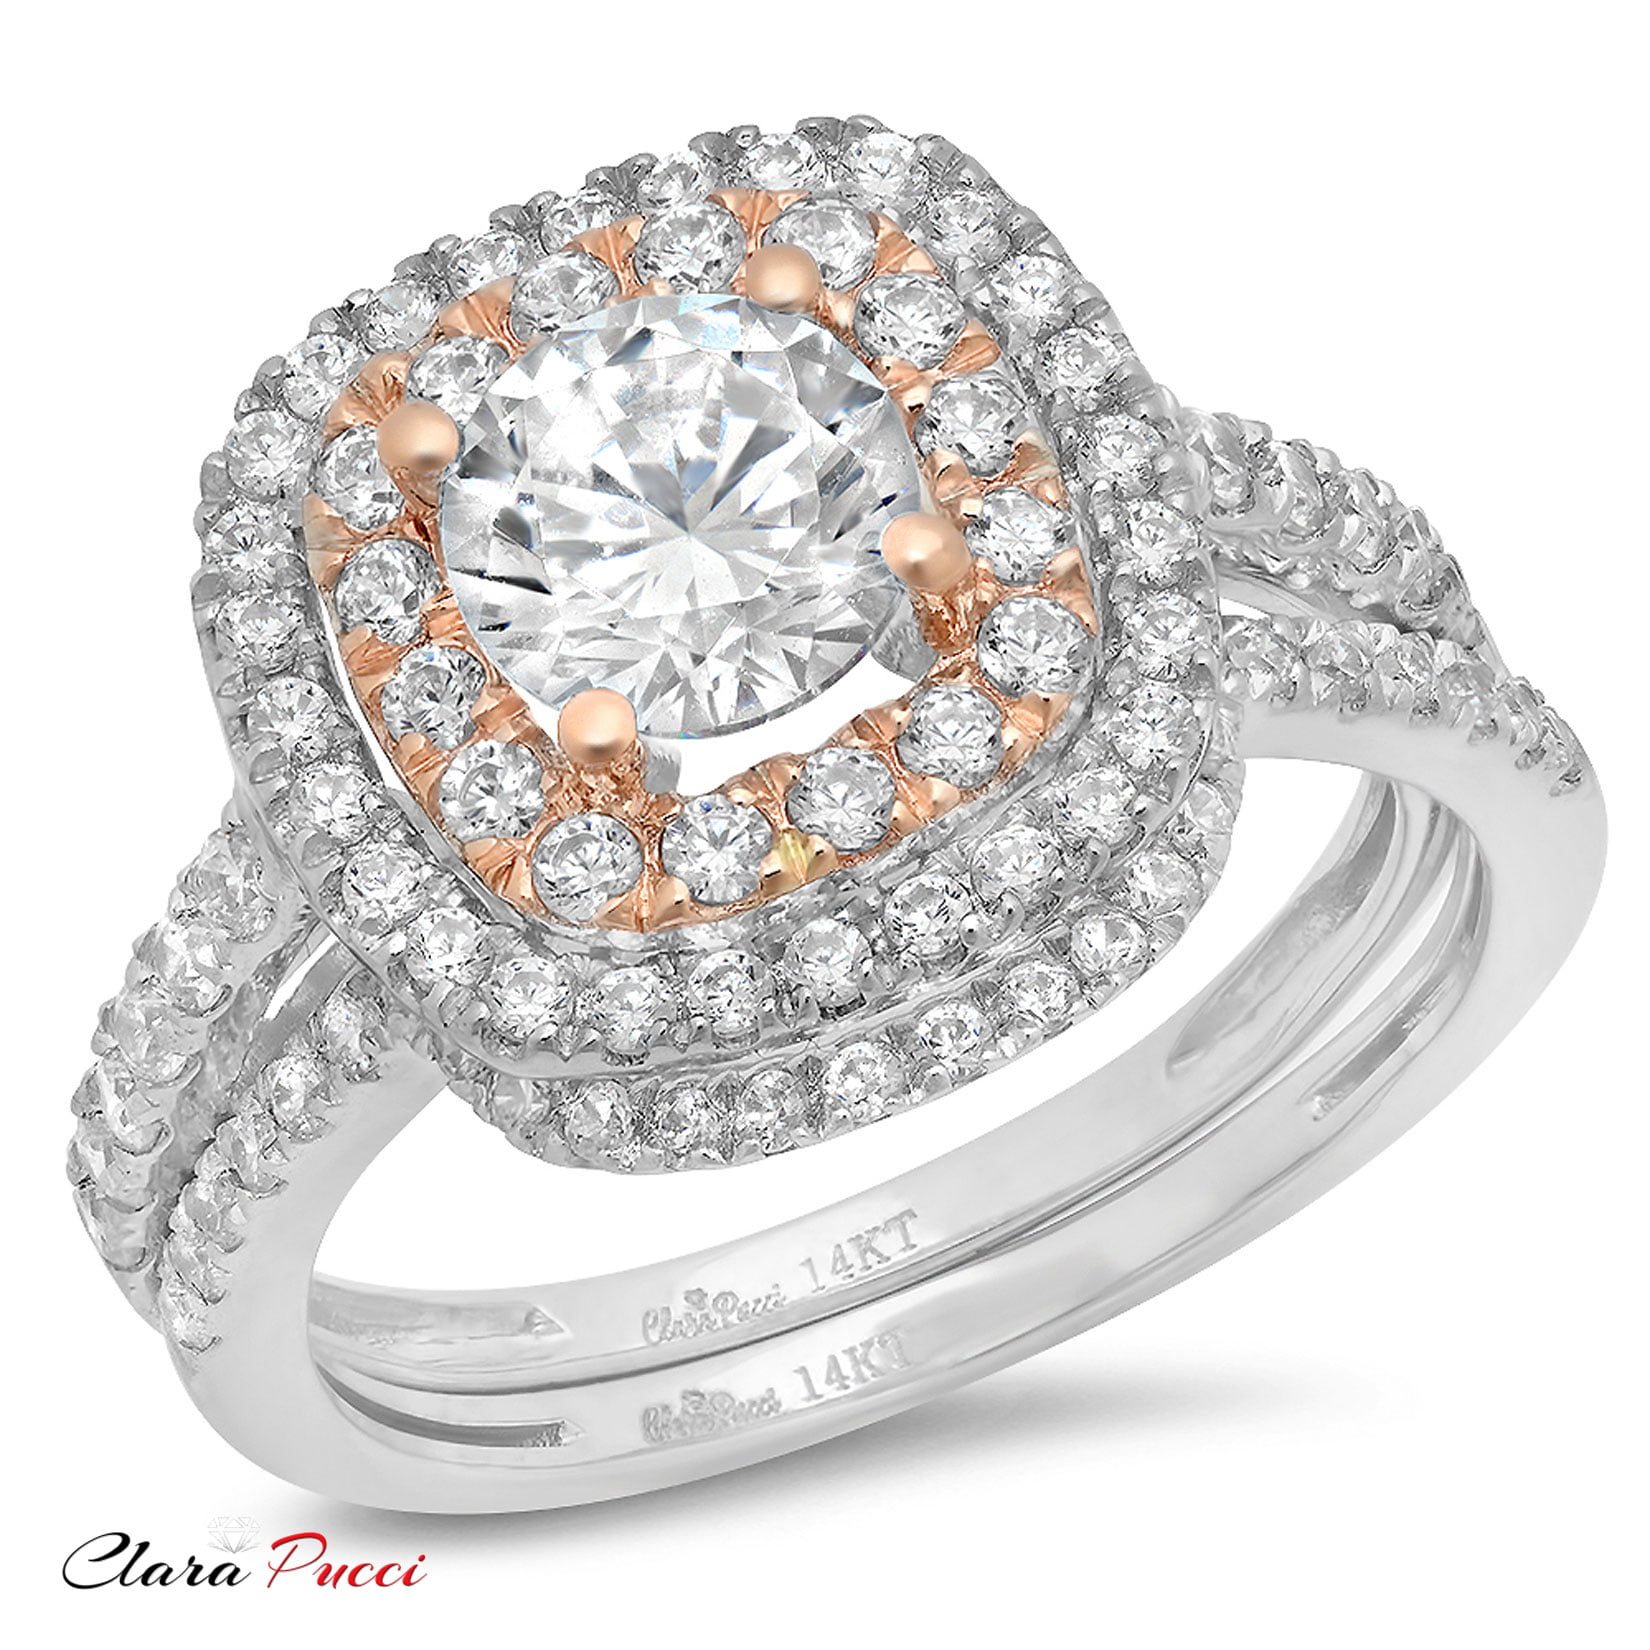 2.10 CT Round Cut Diamond Engagement Bridal Ring Wedding Set 14K White Gold Over 